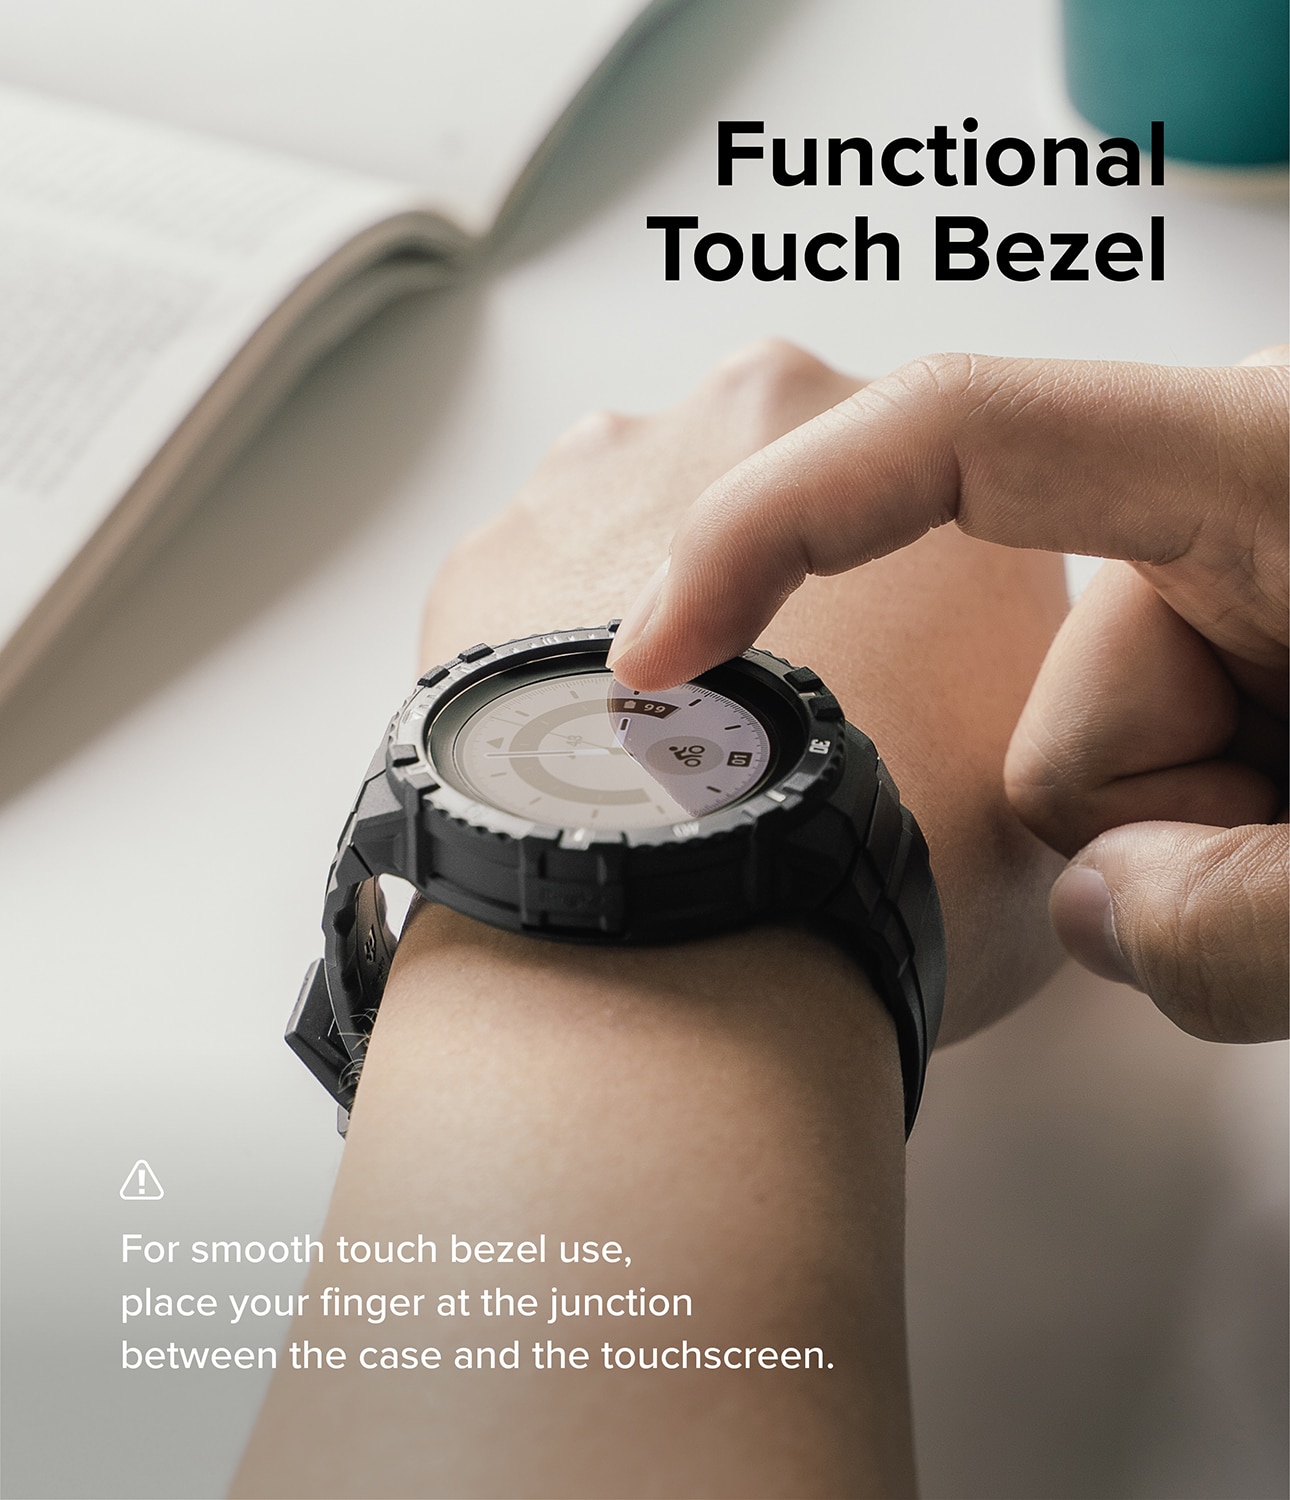 Fusion X Funda Samsung Galaxy Watch 5 Pro 45mm Black (White Index)